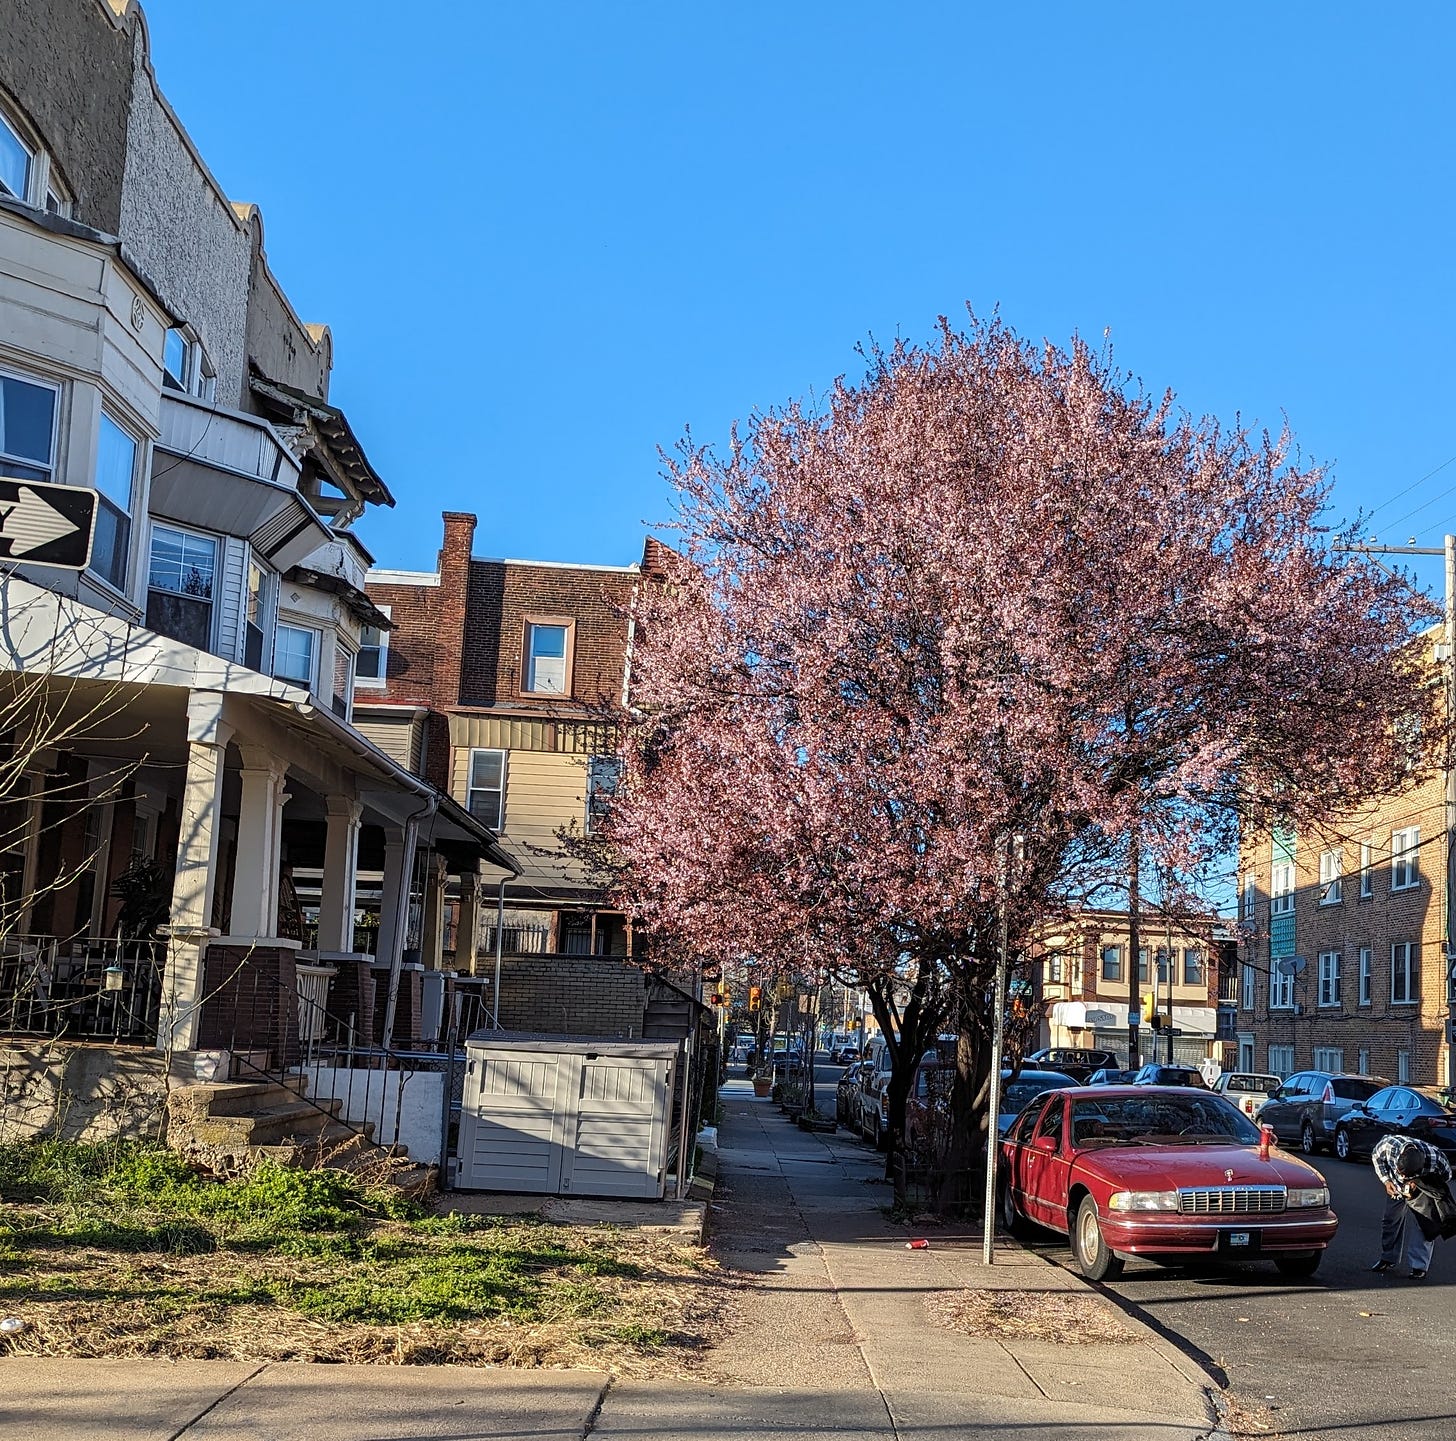 Blooming ornamental plum tree by the street